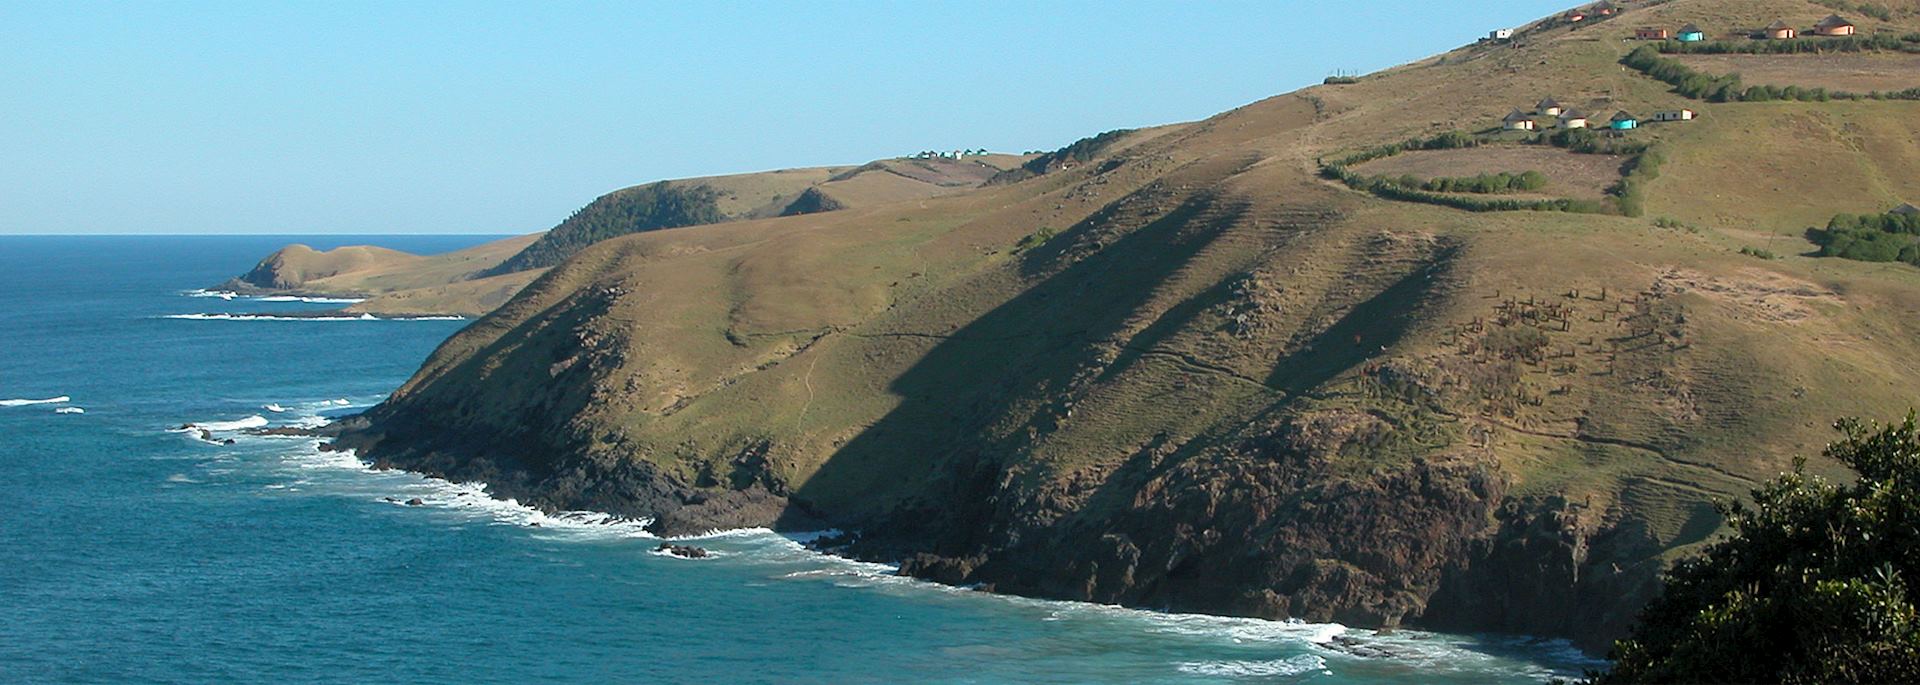 Wild Coast Coastline at Coffee Bay